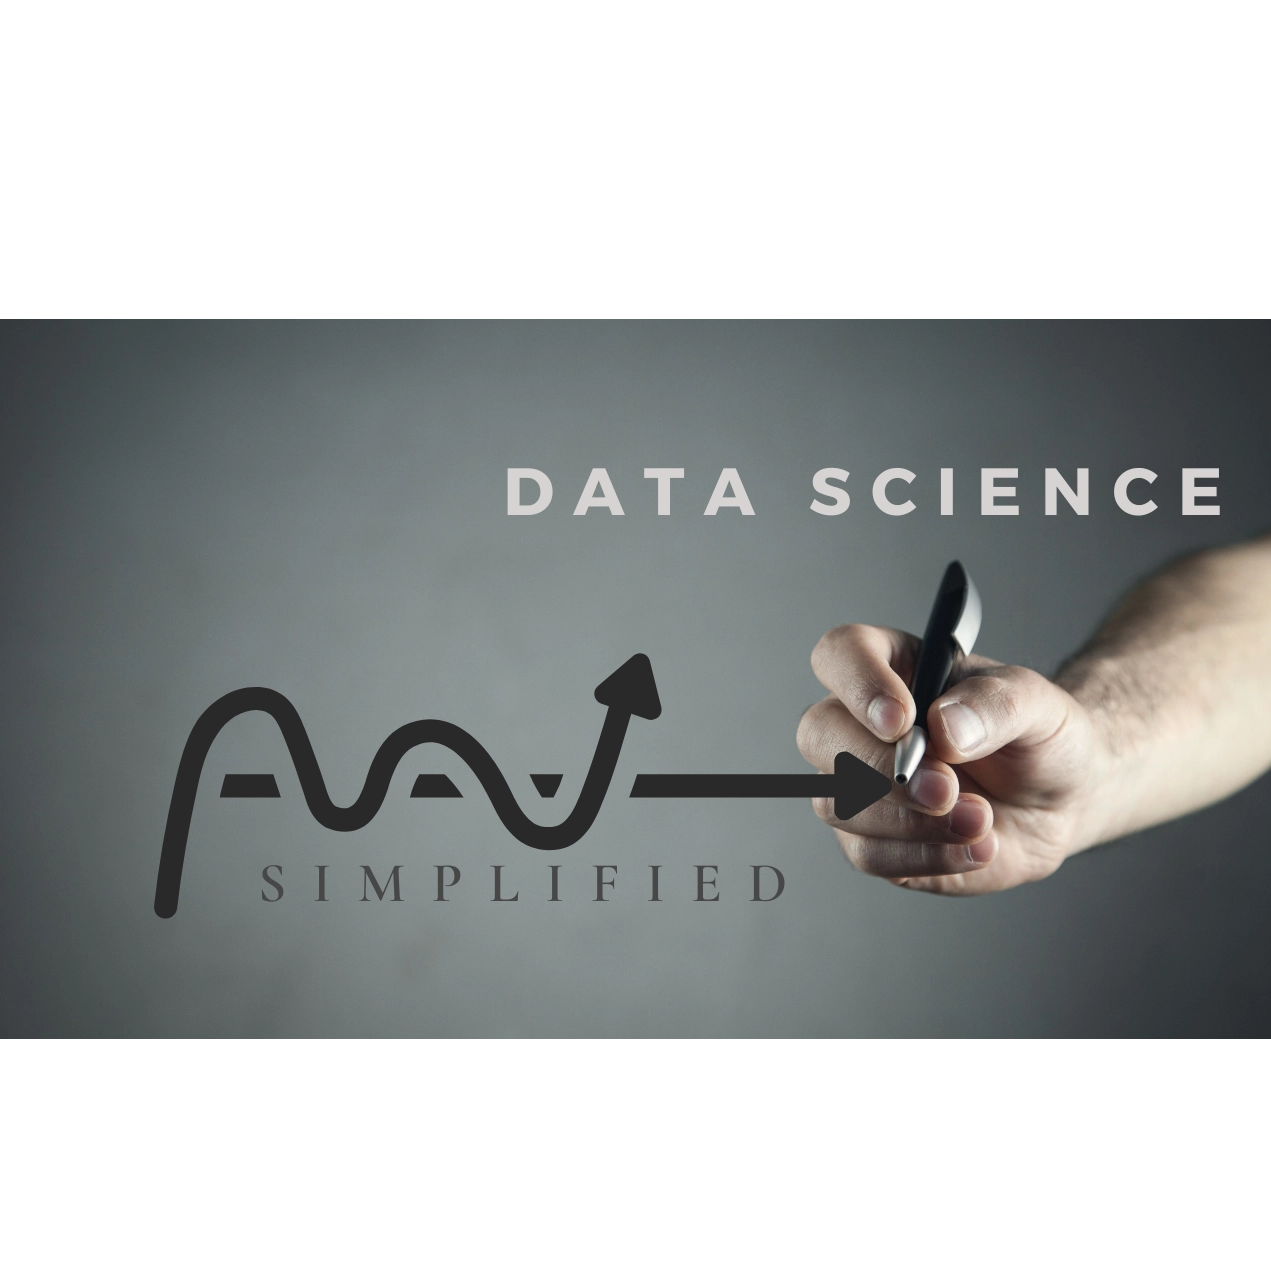 data science in simple words